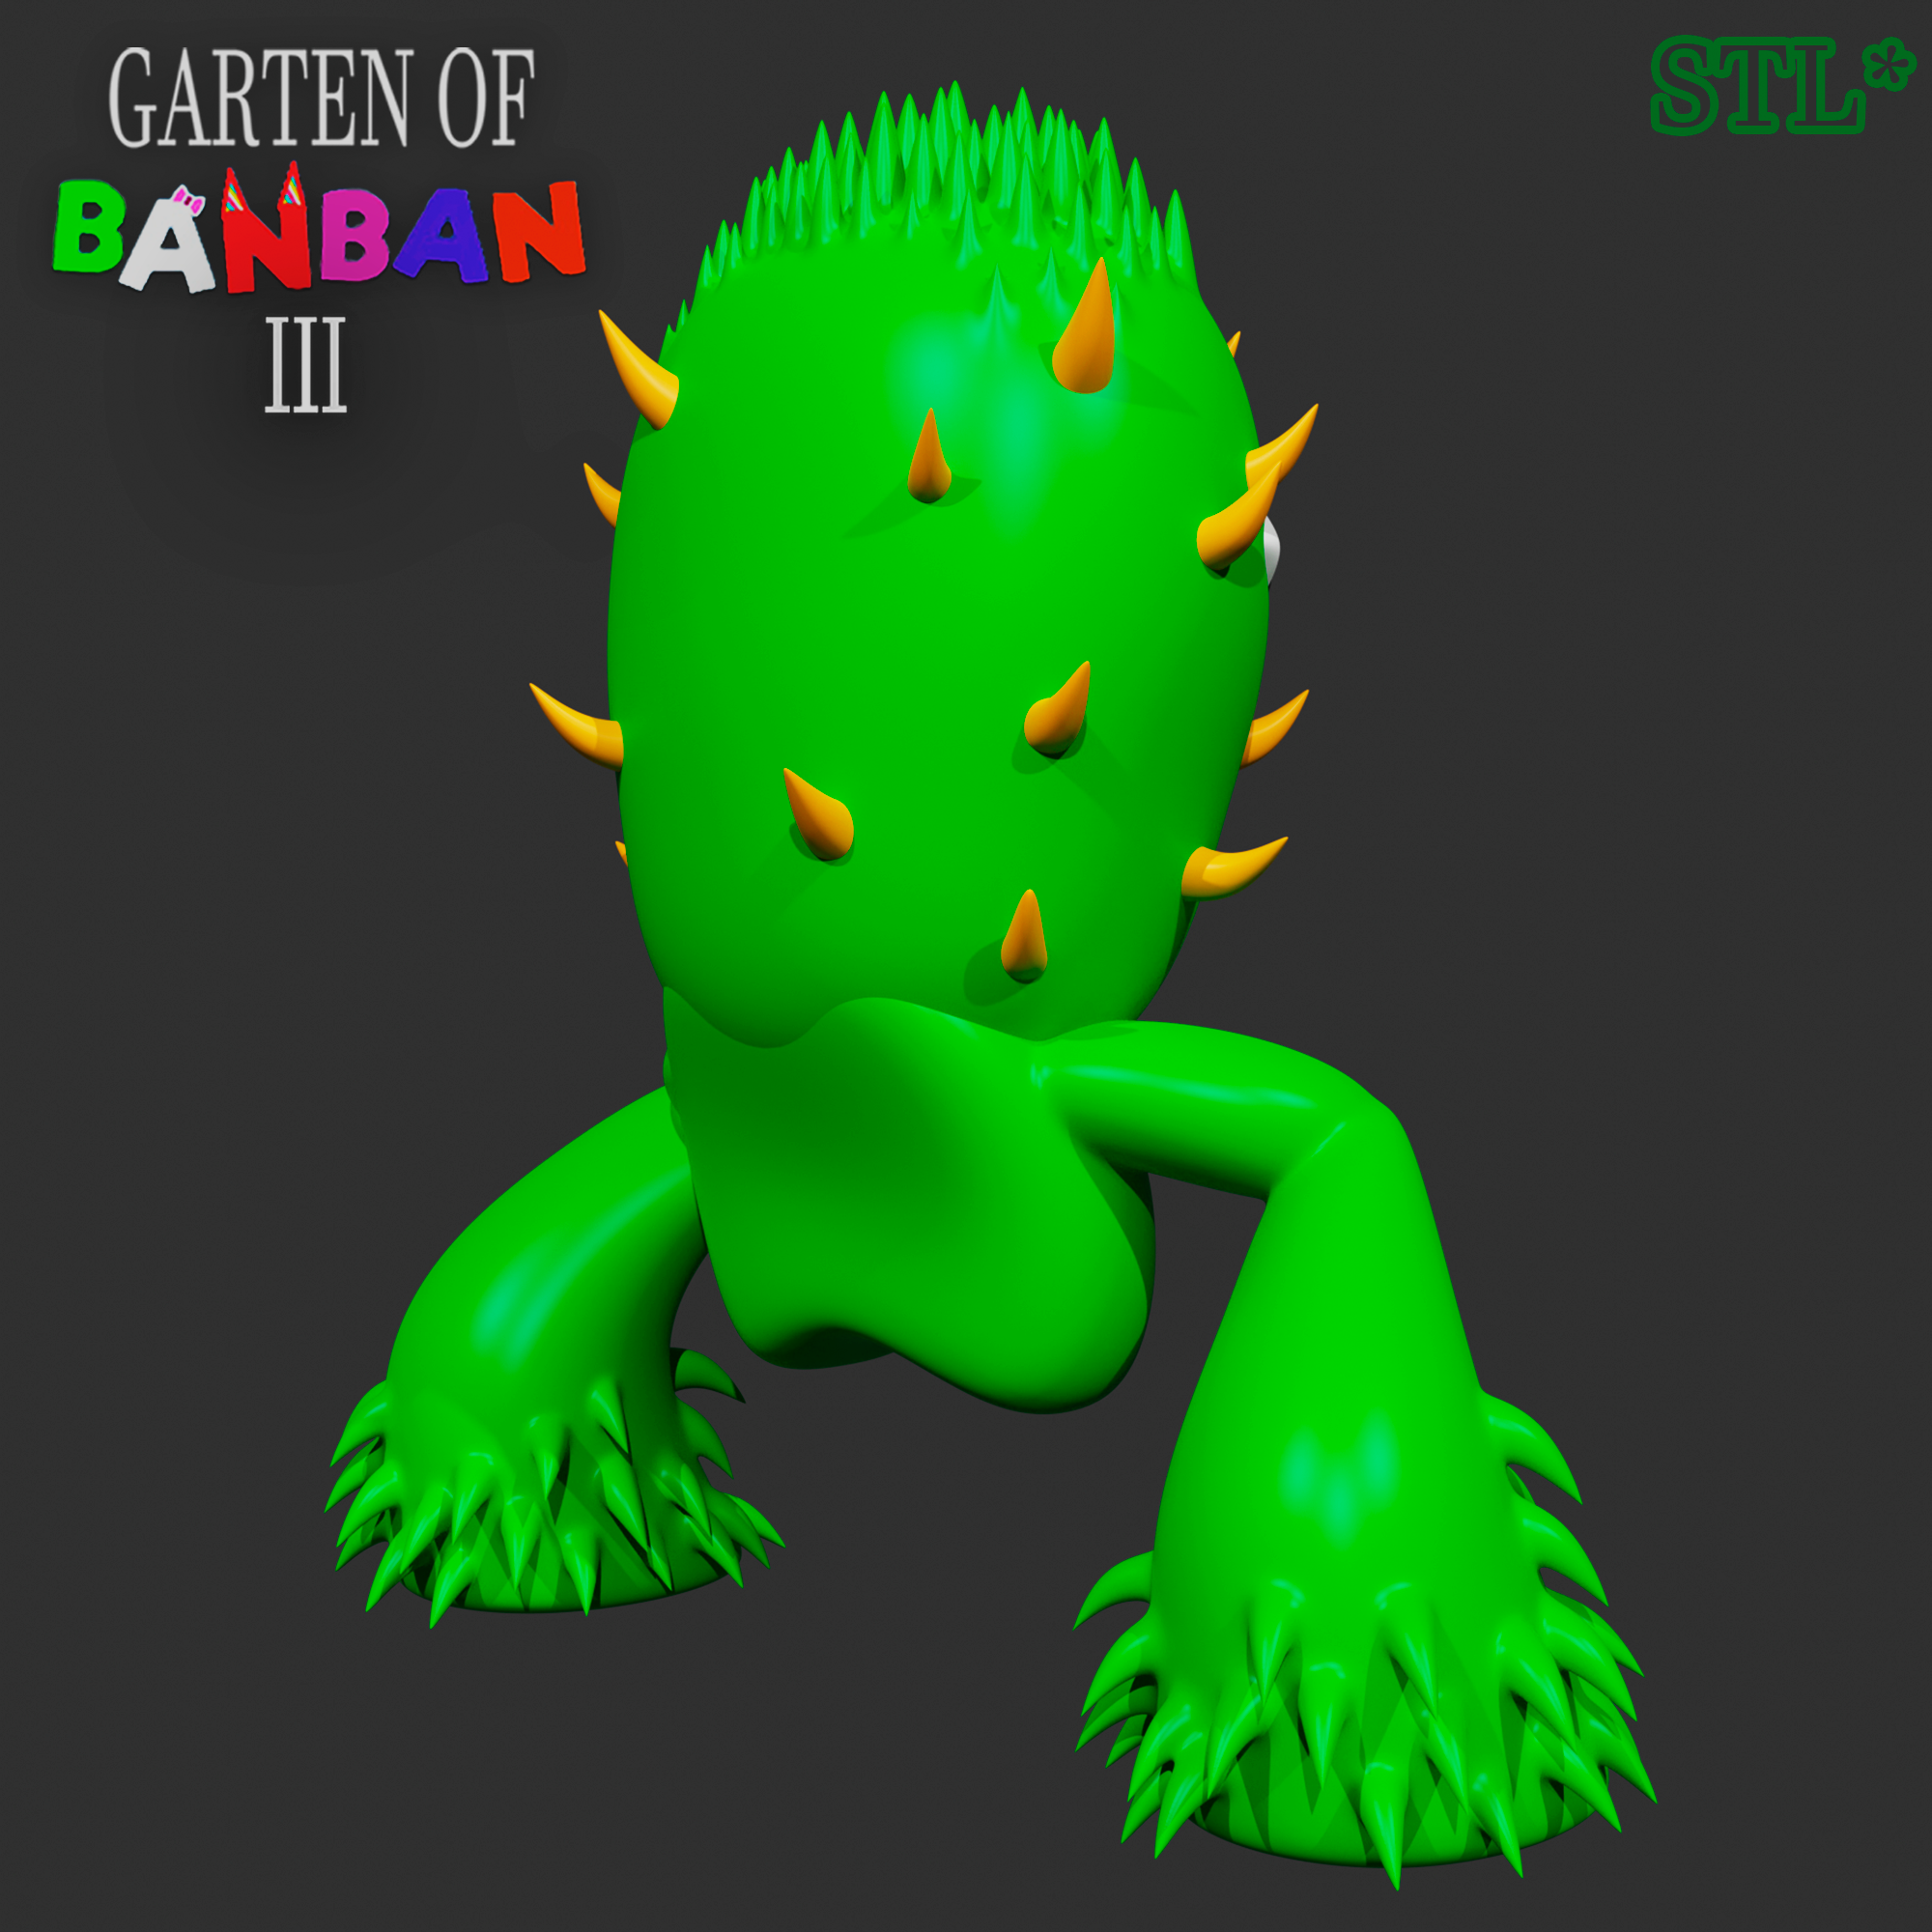 When will Garten of Banban 2 be released in Roblox + Banban Garden 3 